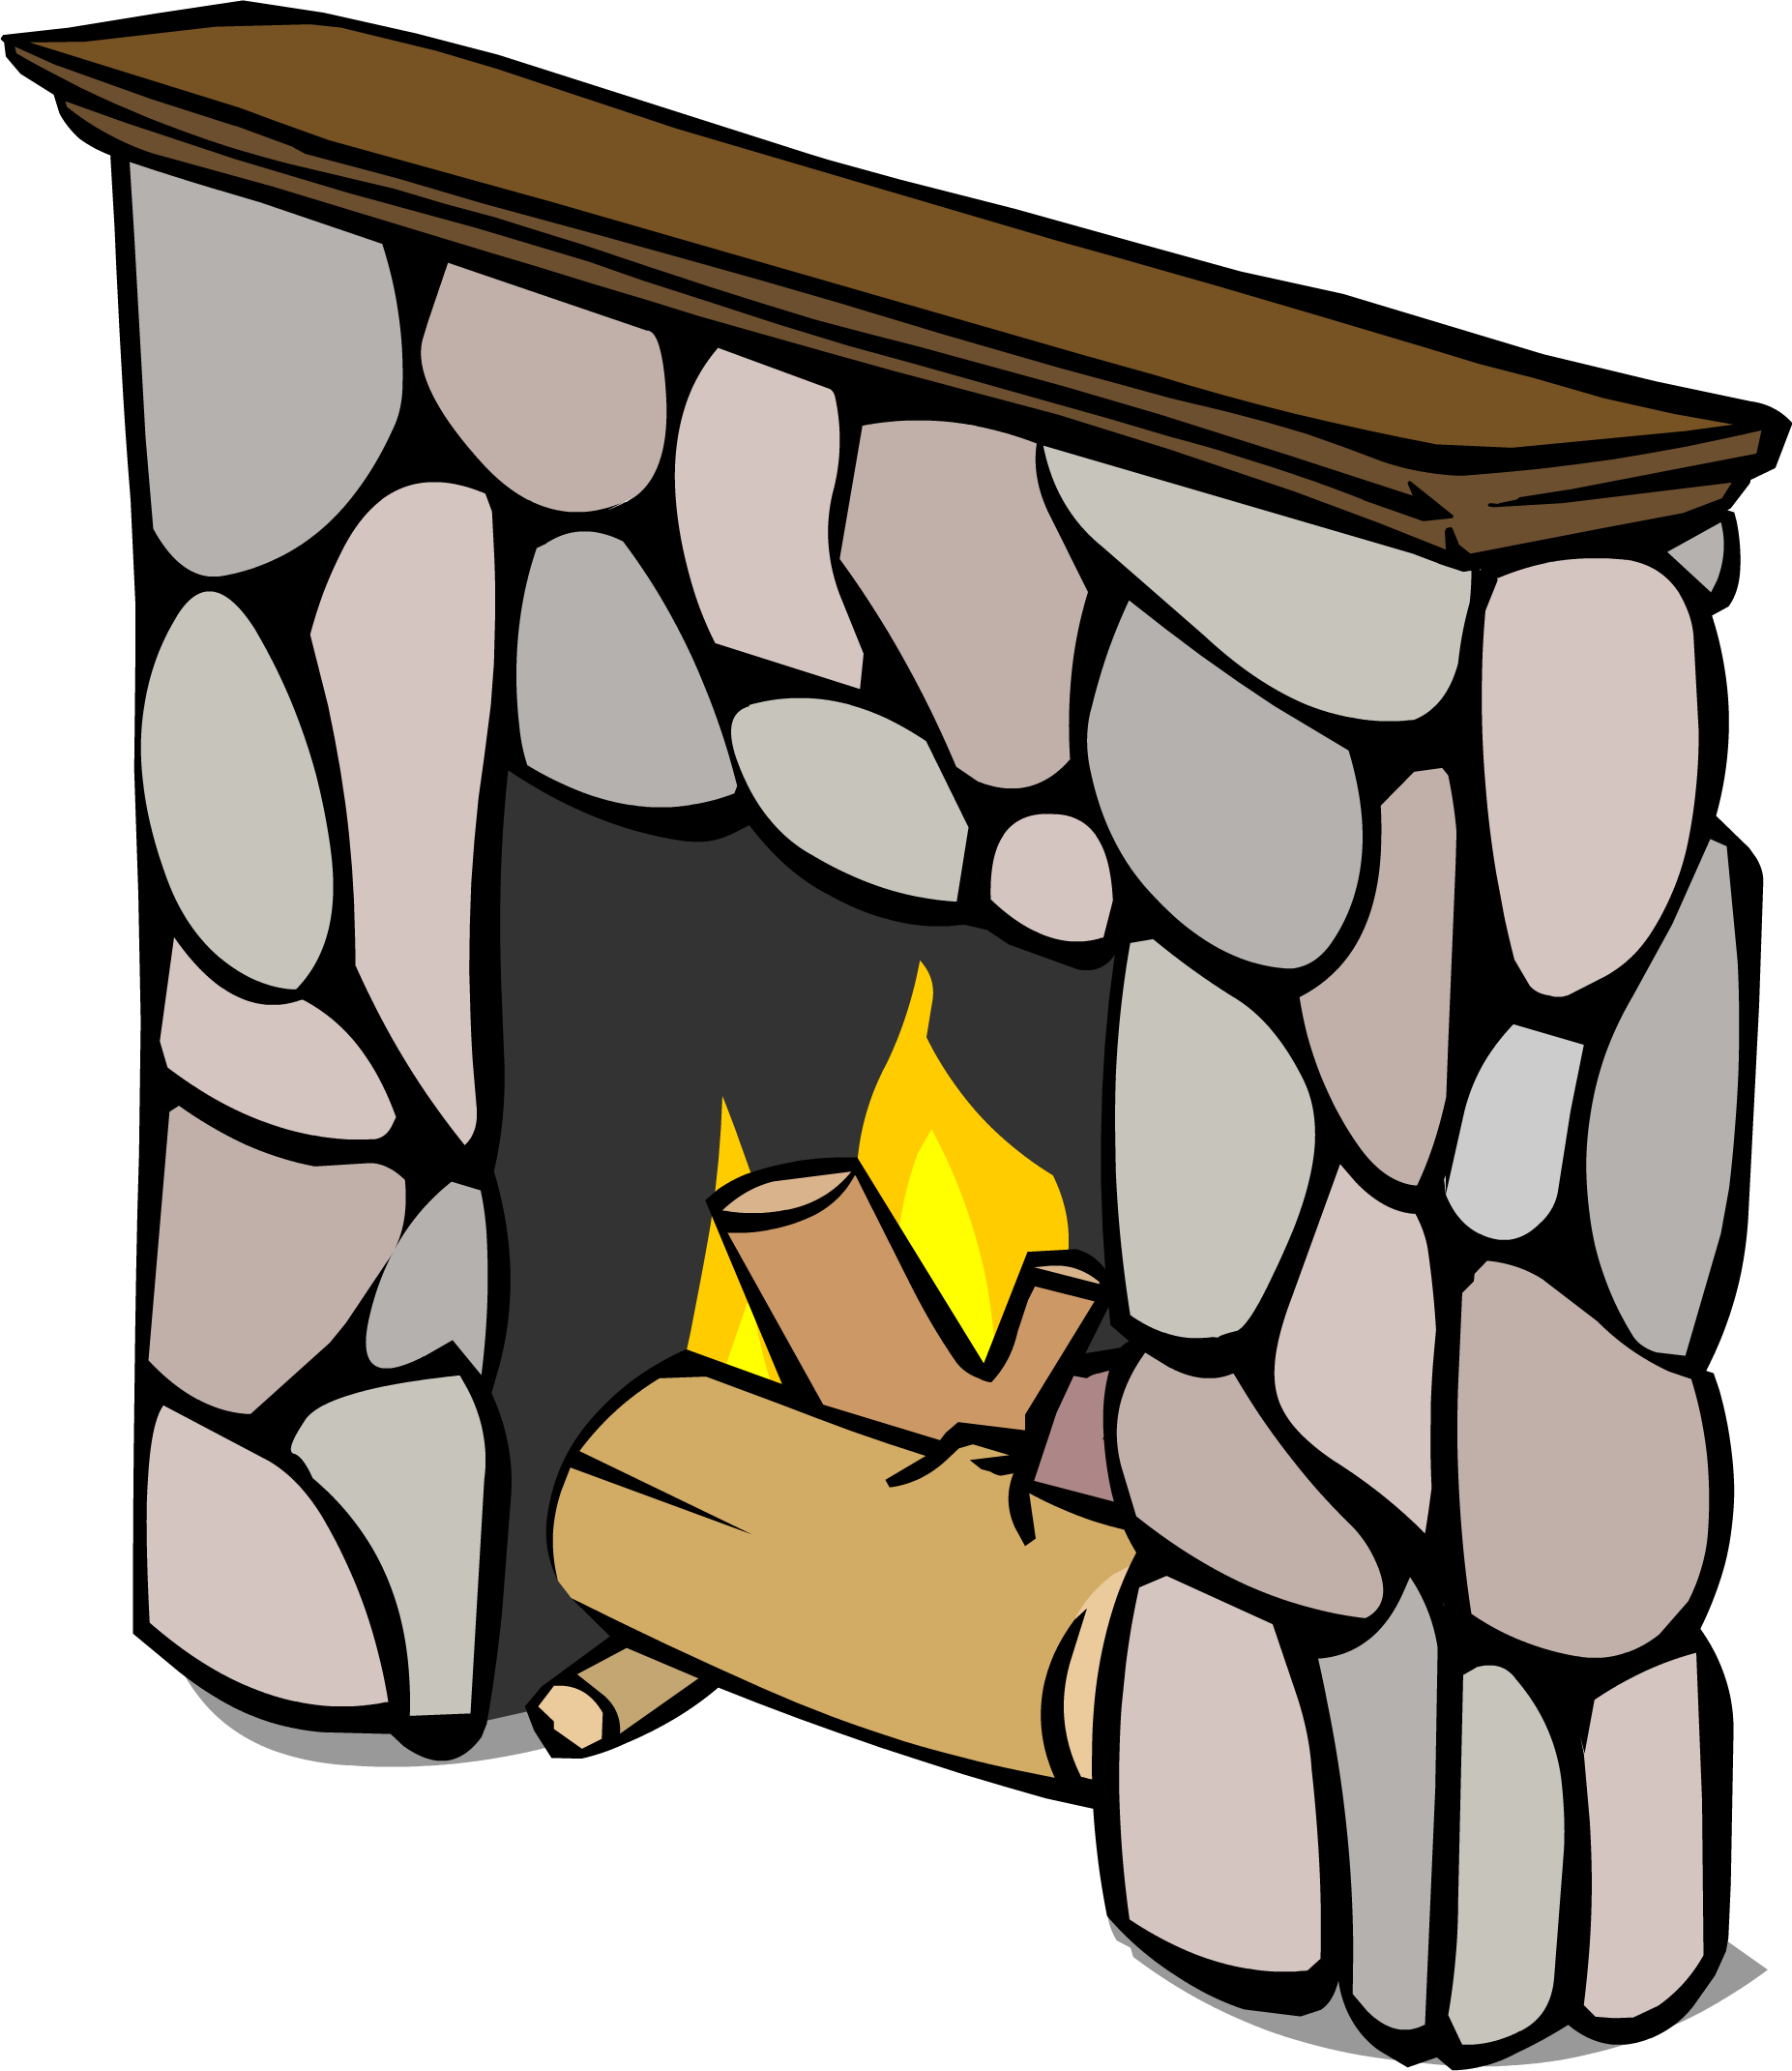 Fireplace Sprite 015 - Fireplace Sprite 015 (1853x2141)